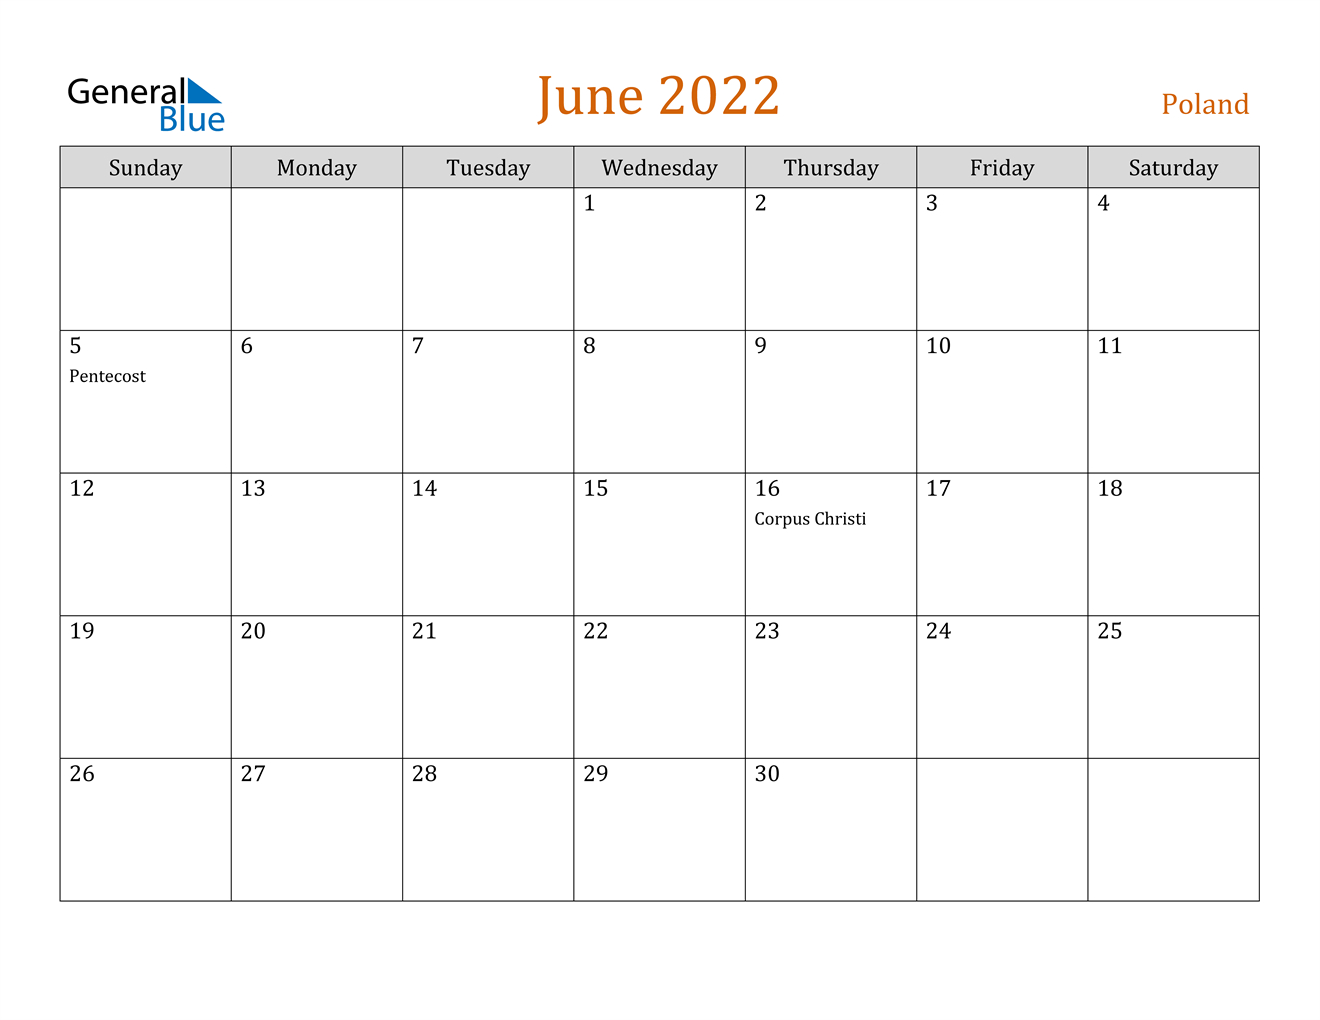 June 2022 Calendar - Poland